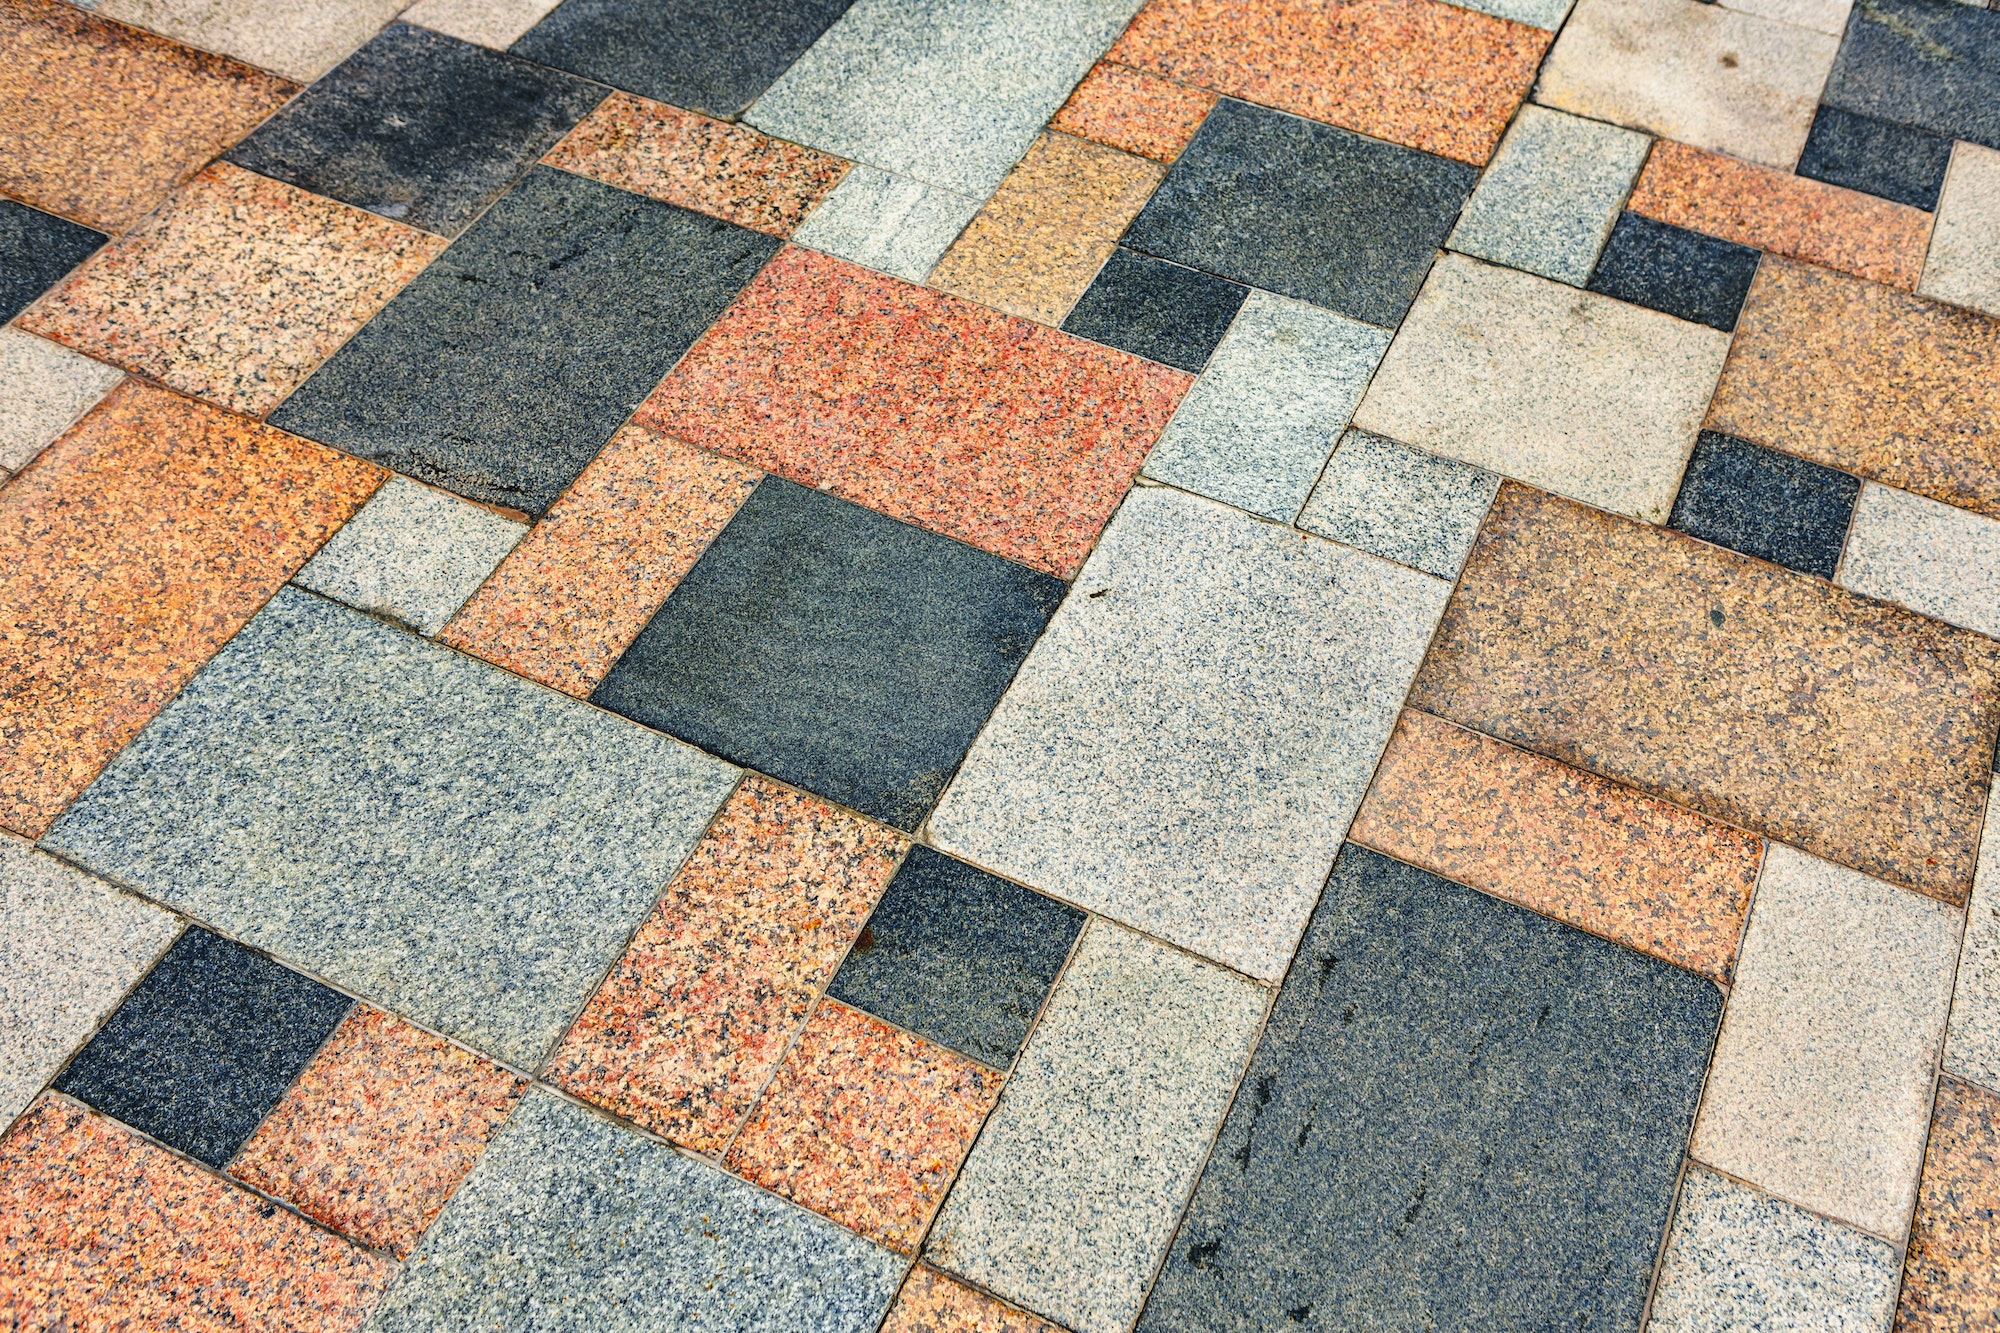 Street floor textured tiles as a background